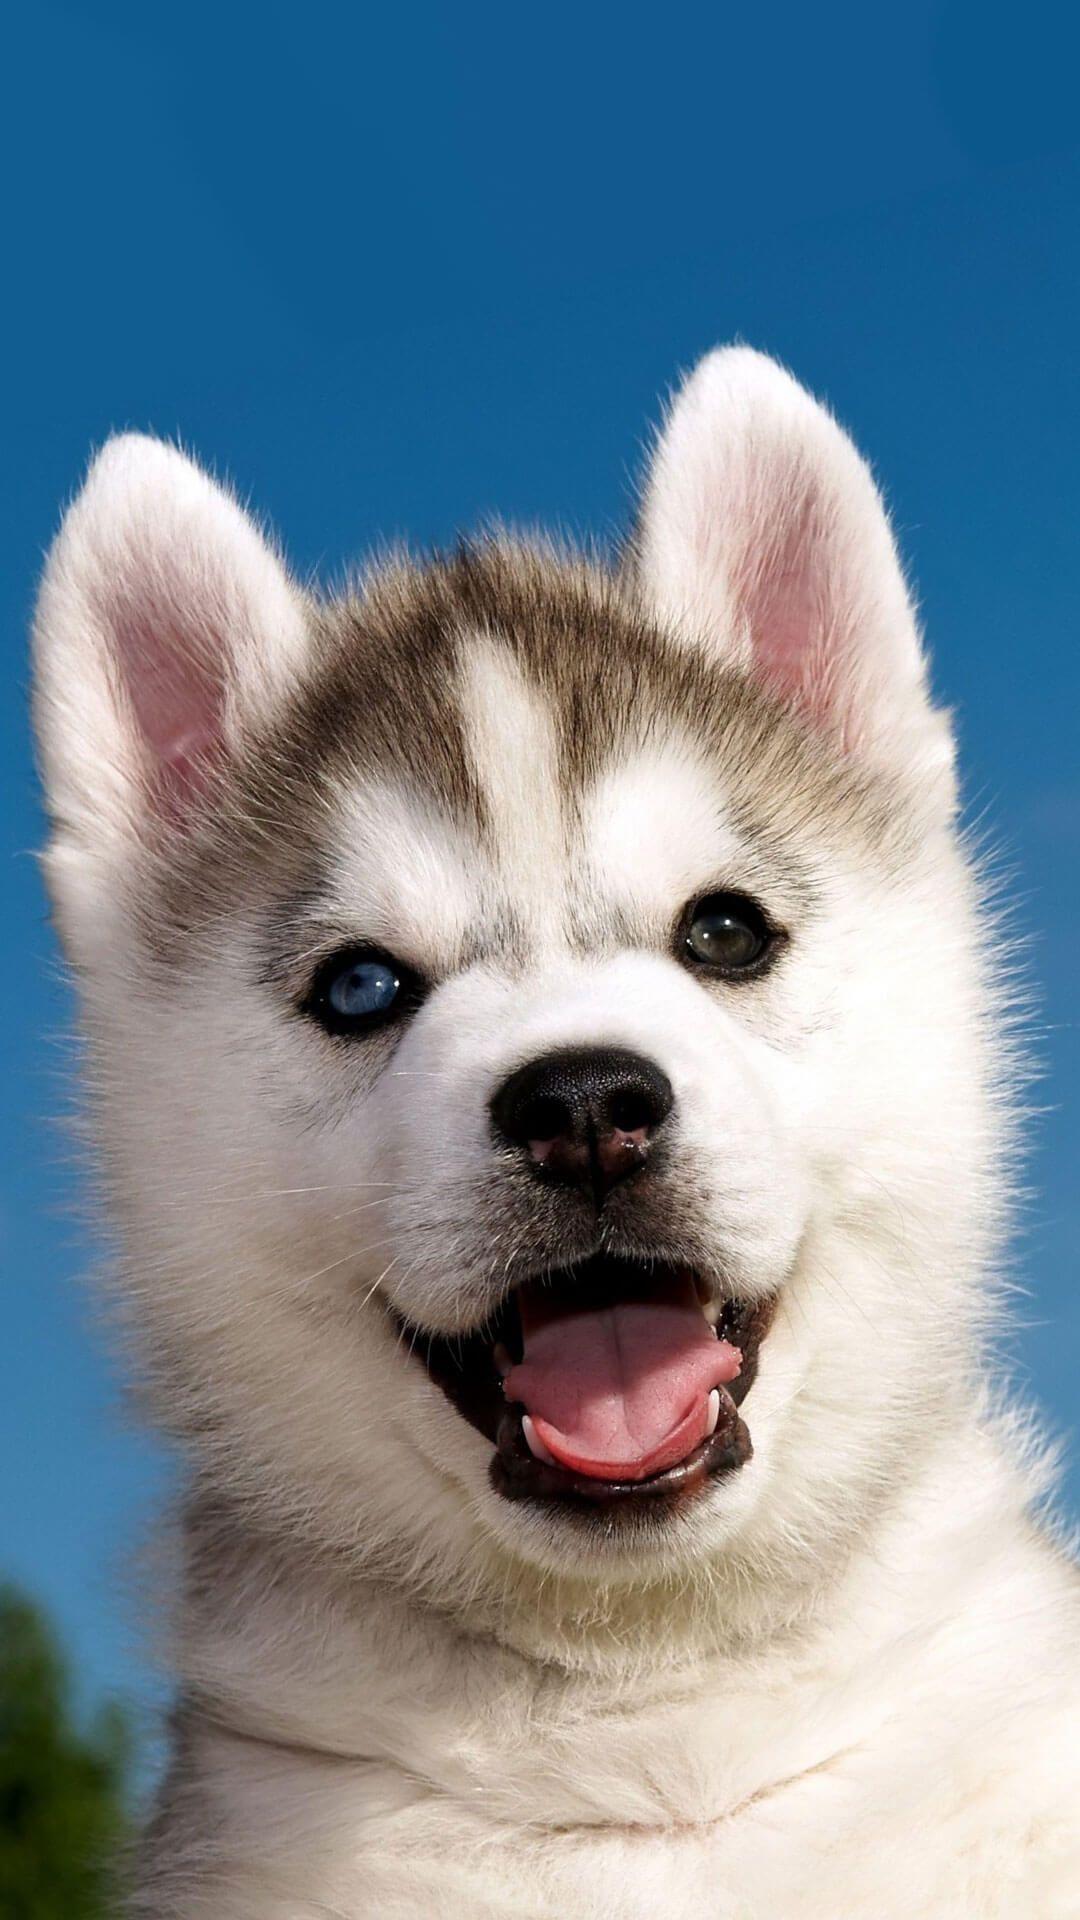 Cute Siberian Husky Puppy iPhone 6 Wallpaper. Dog wallpaper, Cute